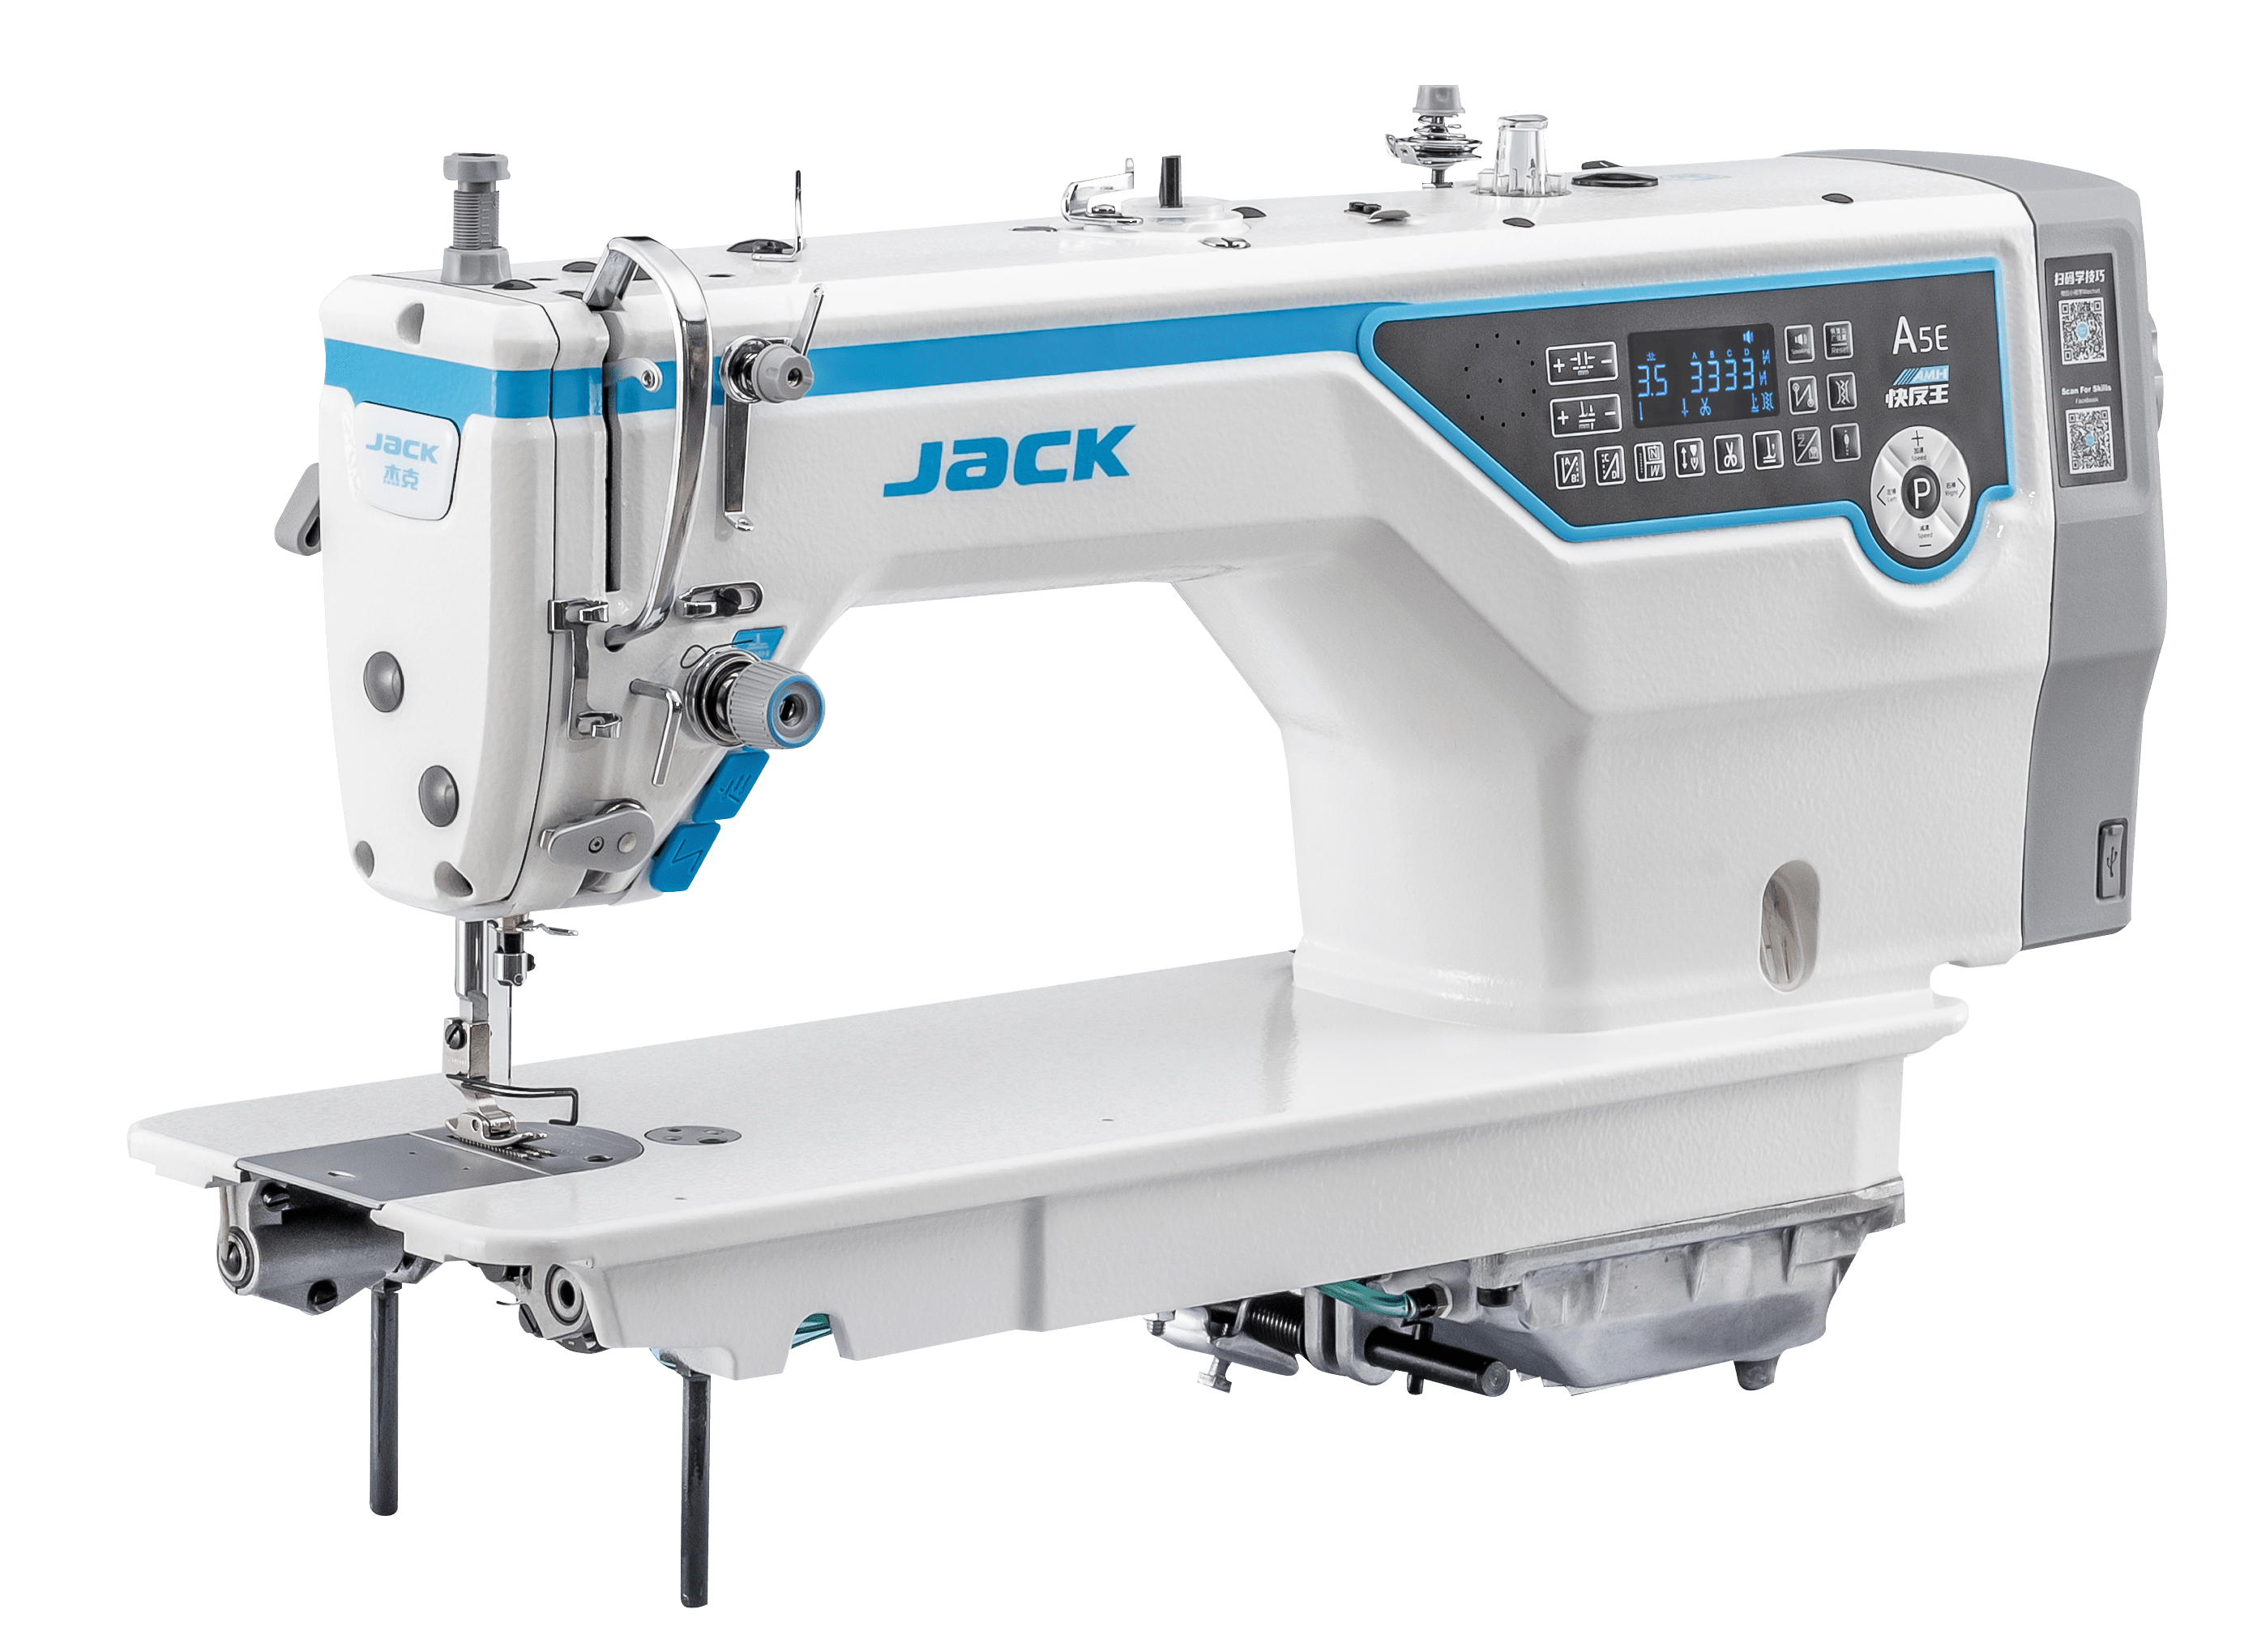 The industrial single needle lockstitch sewing machine of Jack